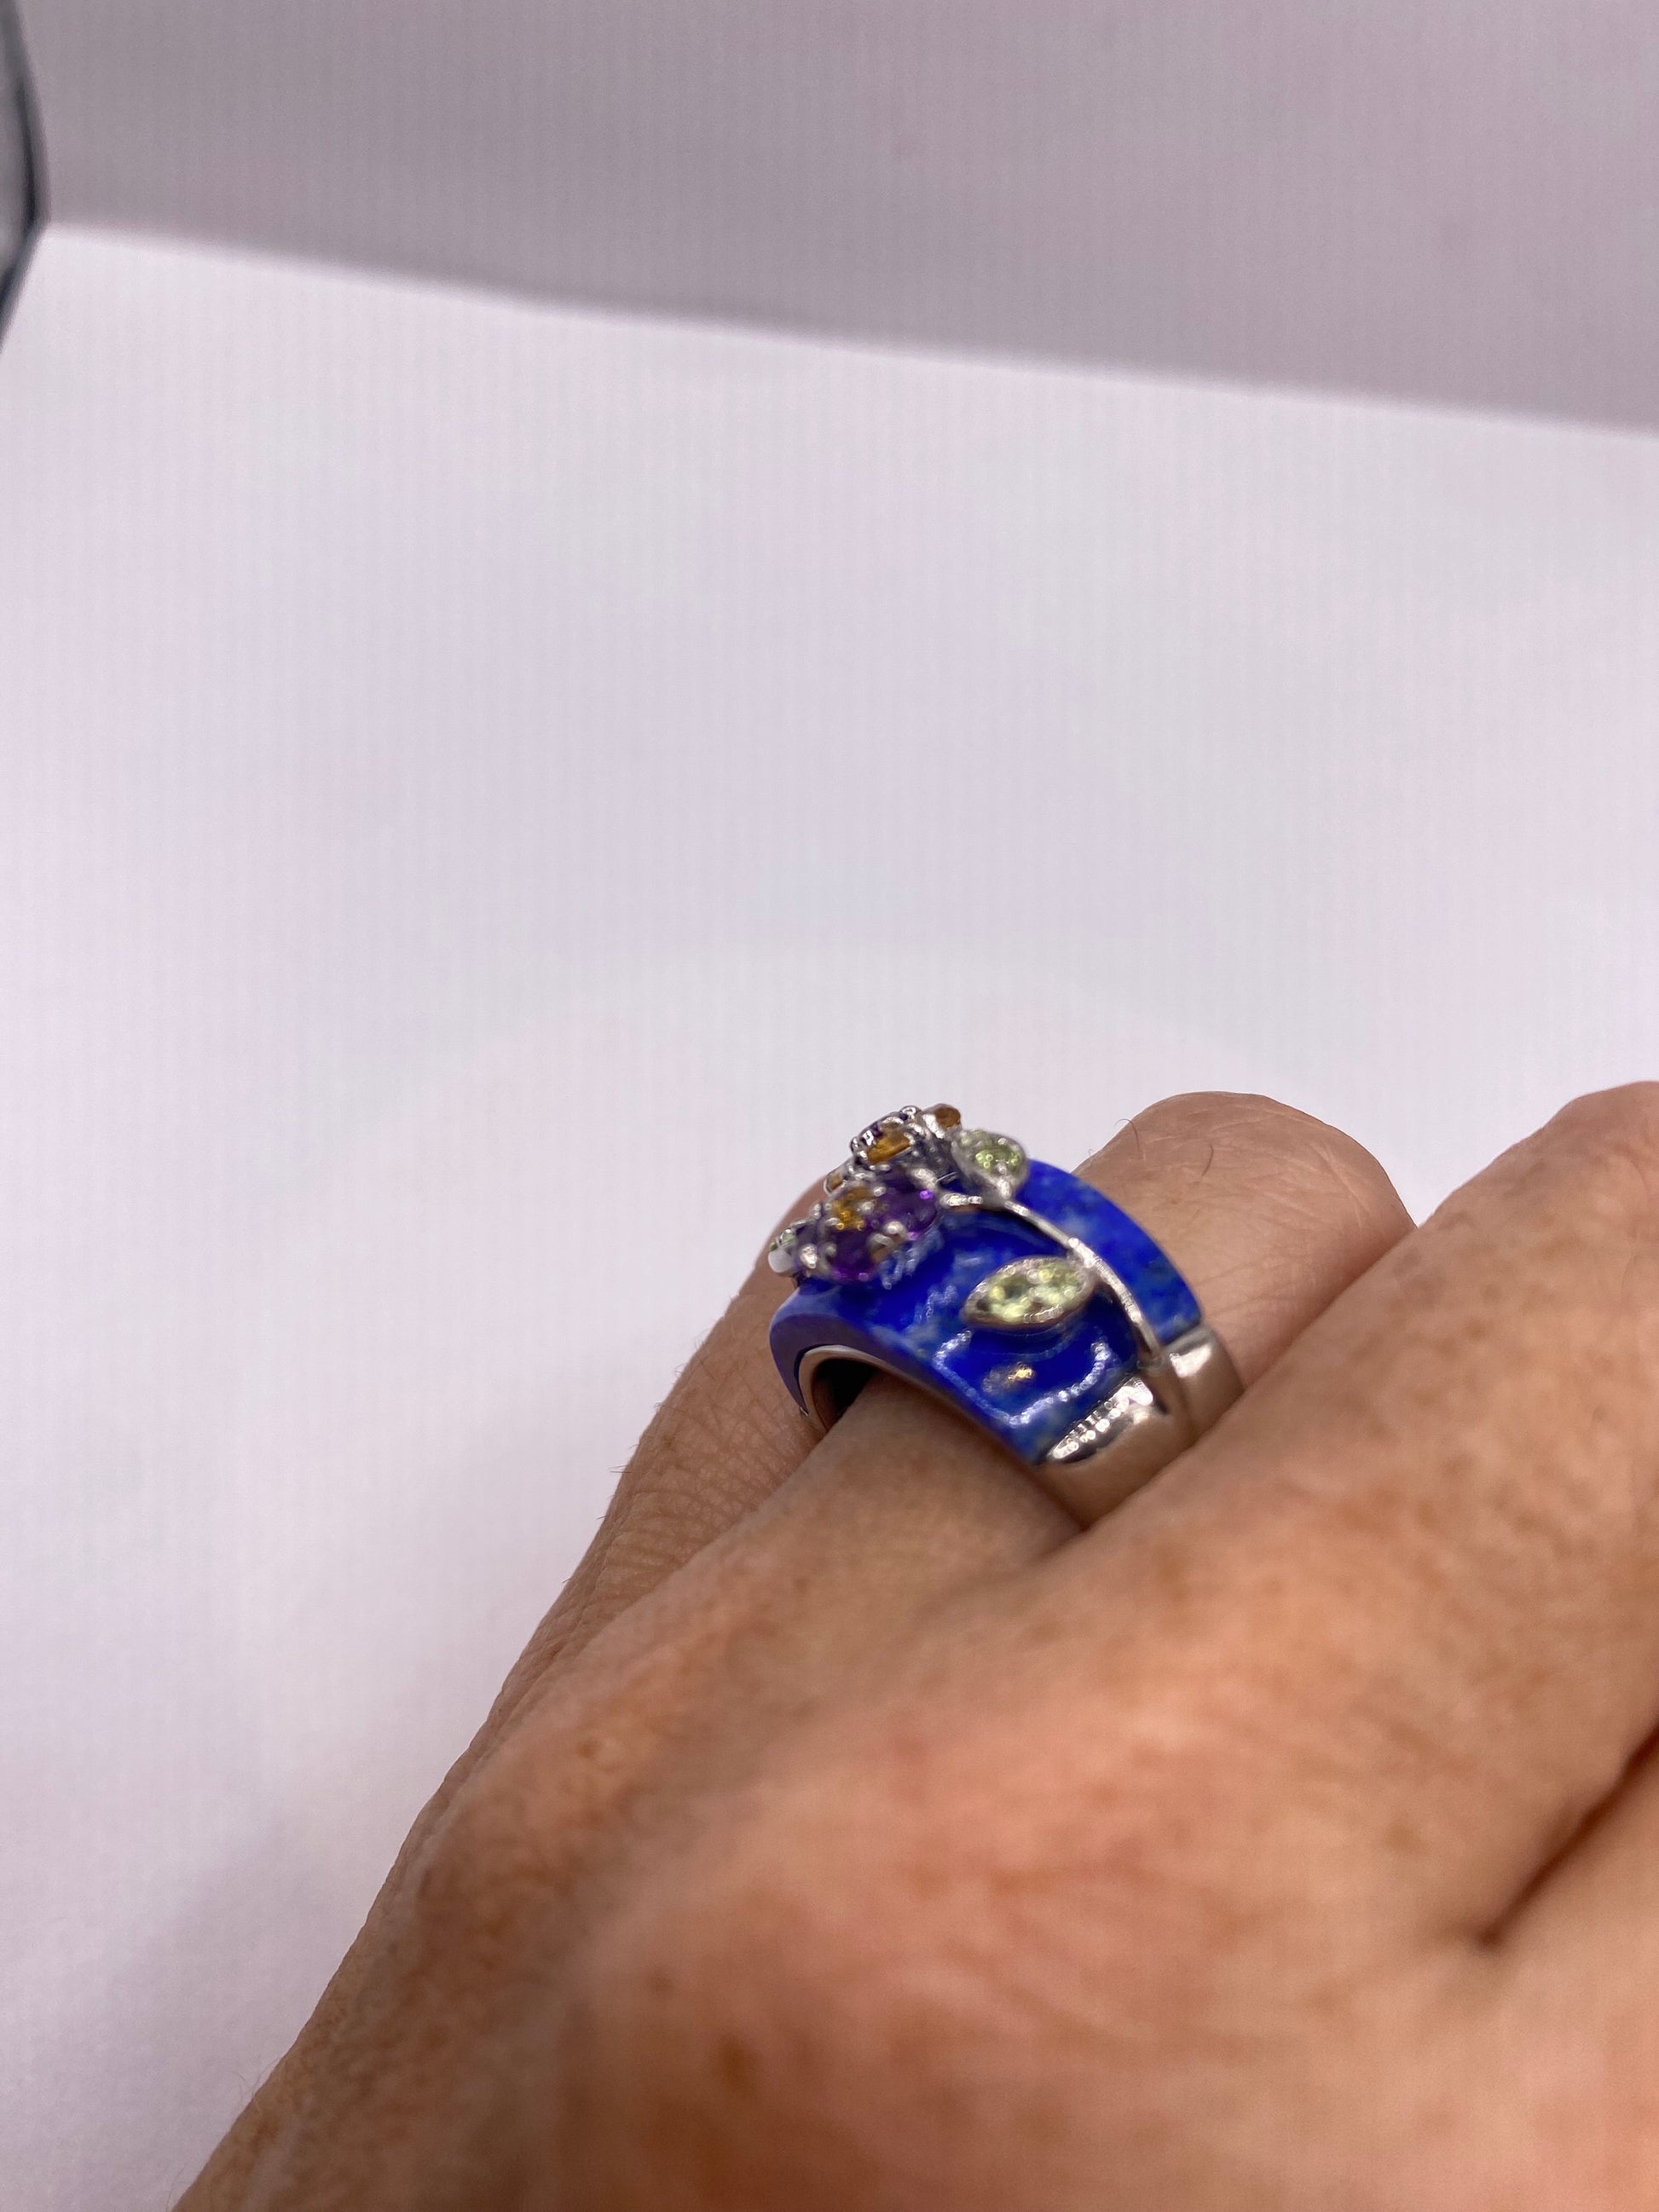 Vintage deep lapis lazuli 925 Sterling Silver Ring